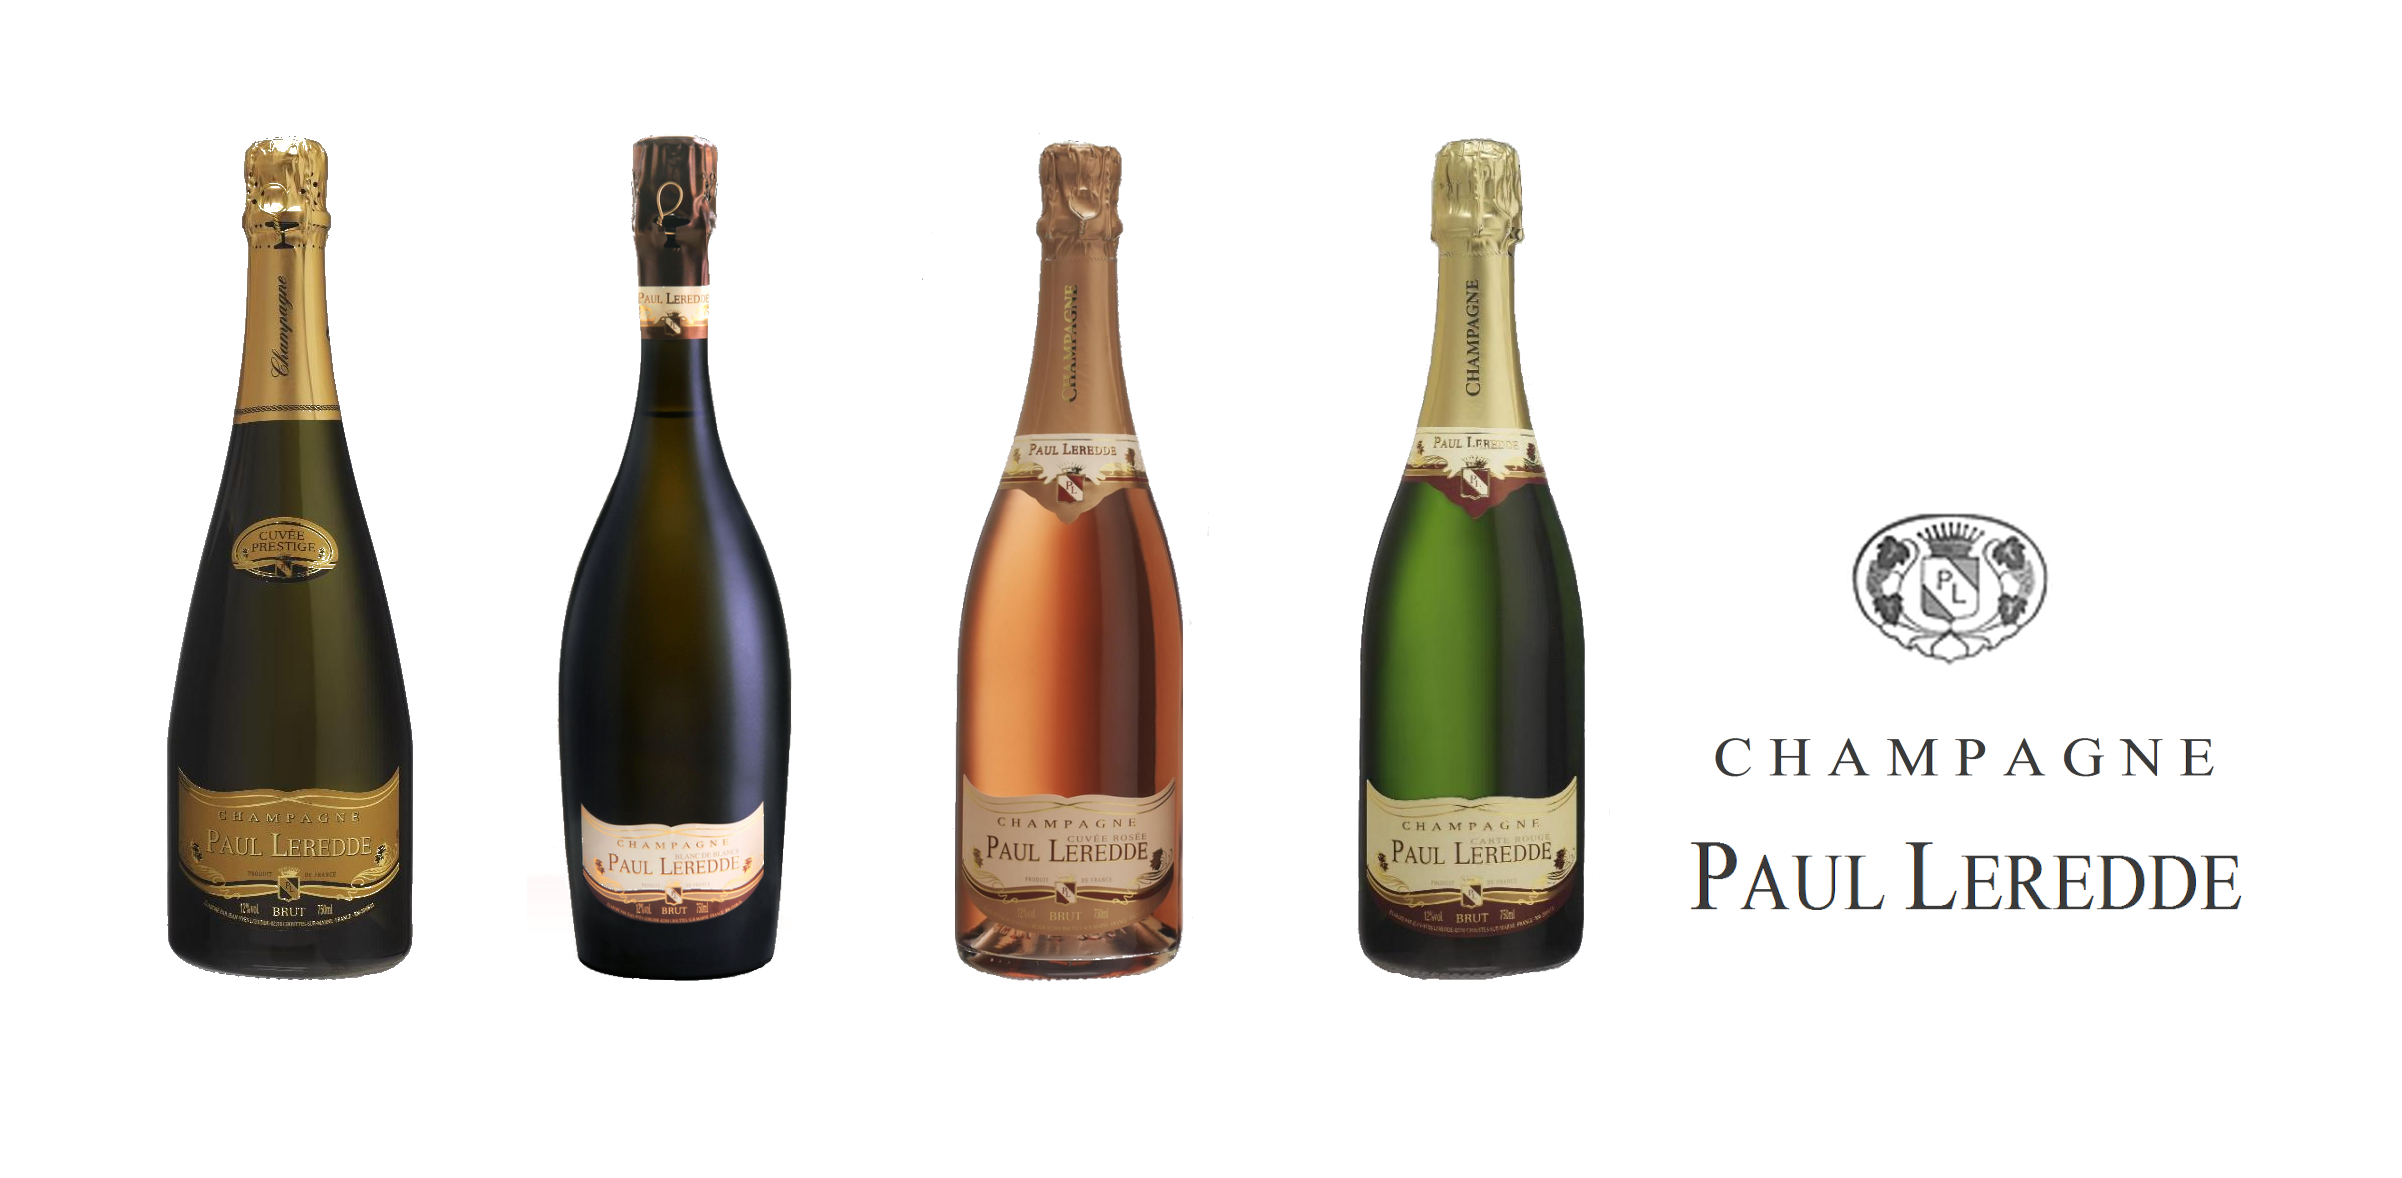 Champagne Paul Leredde